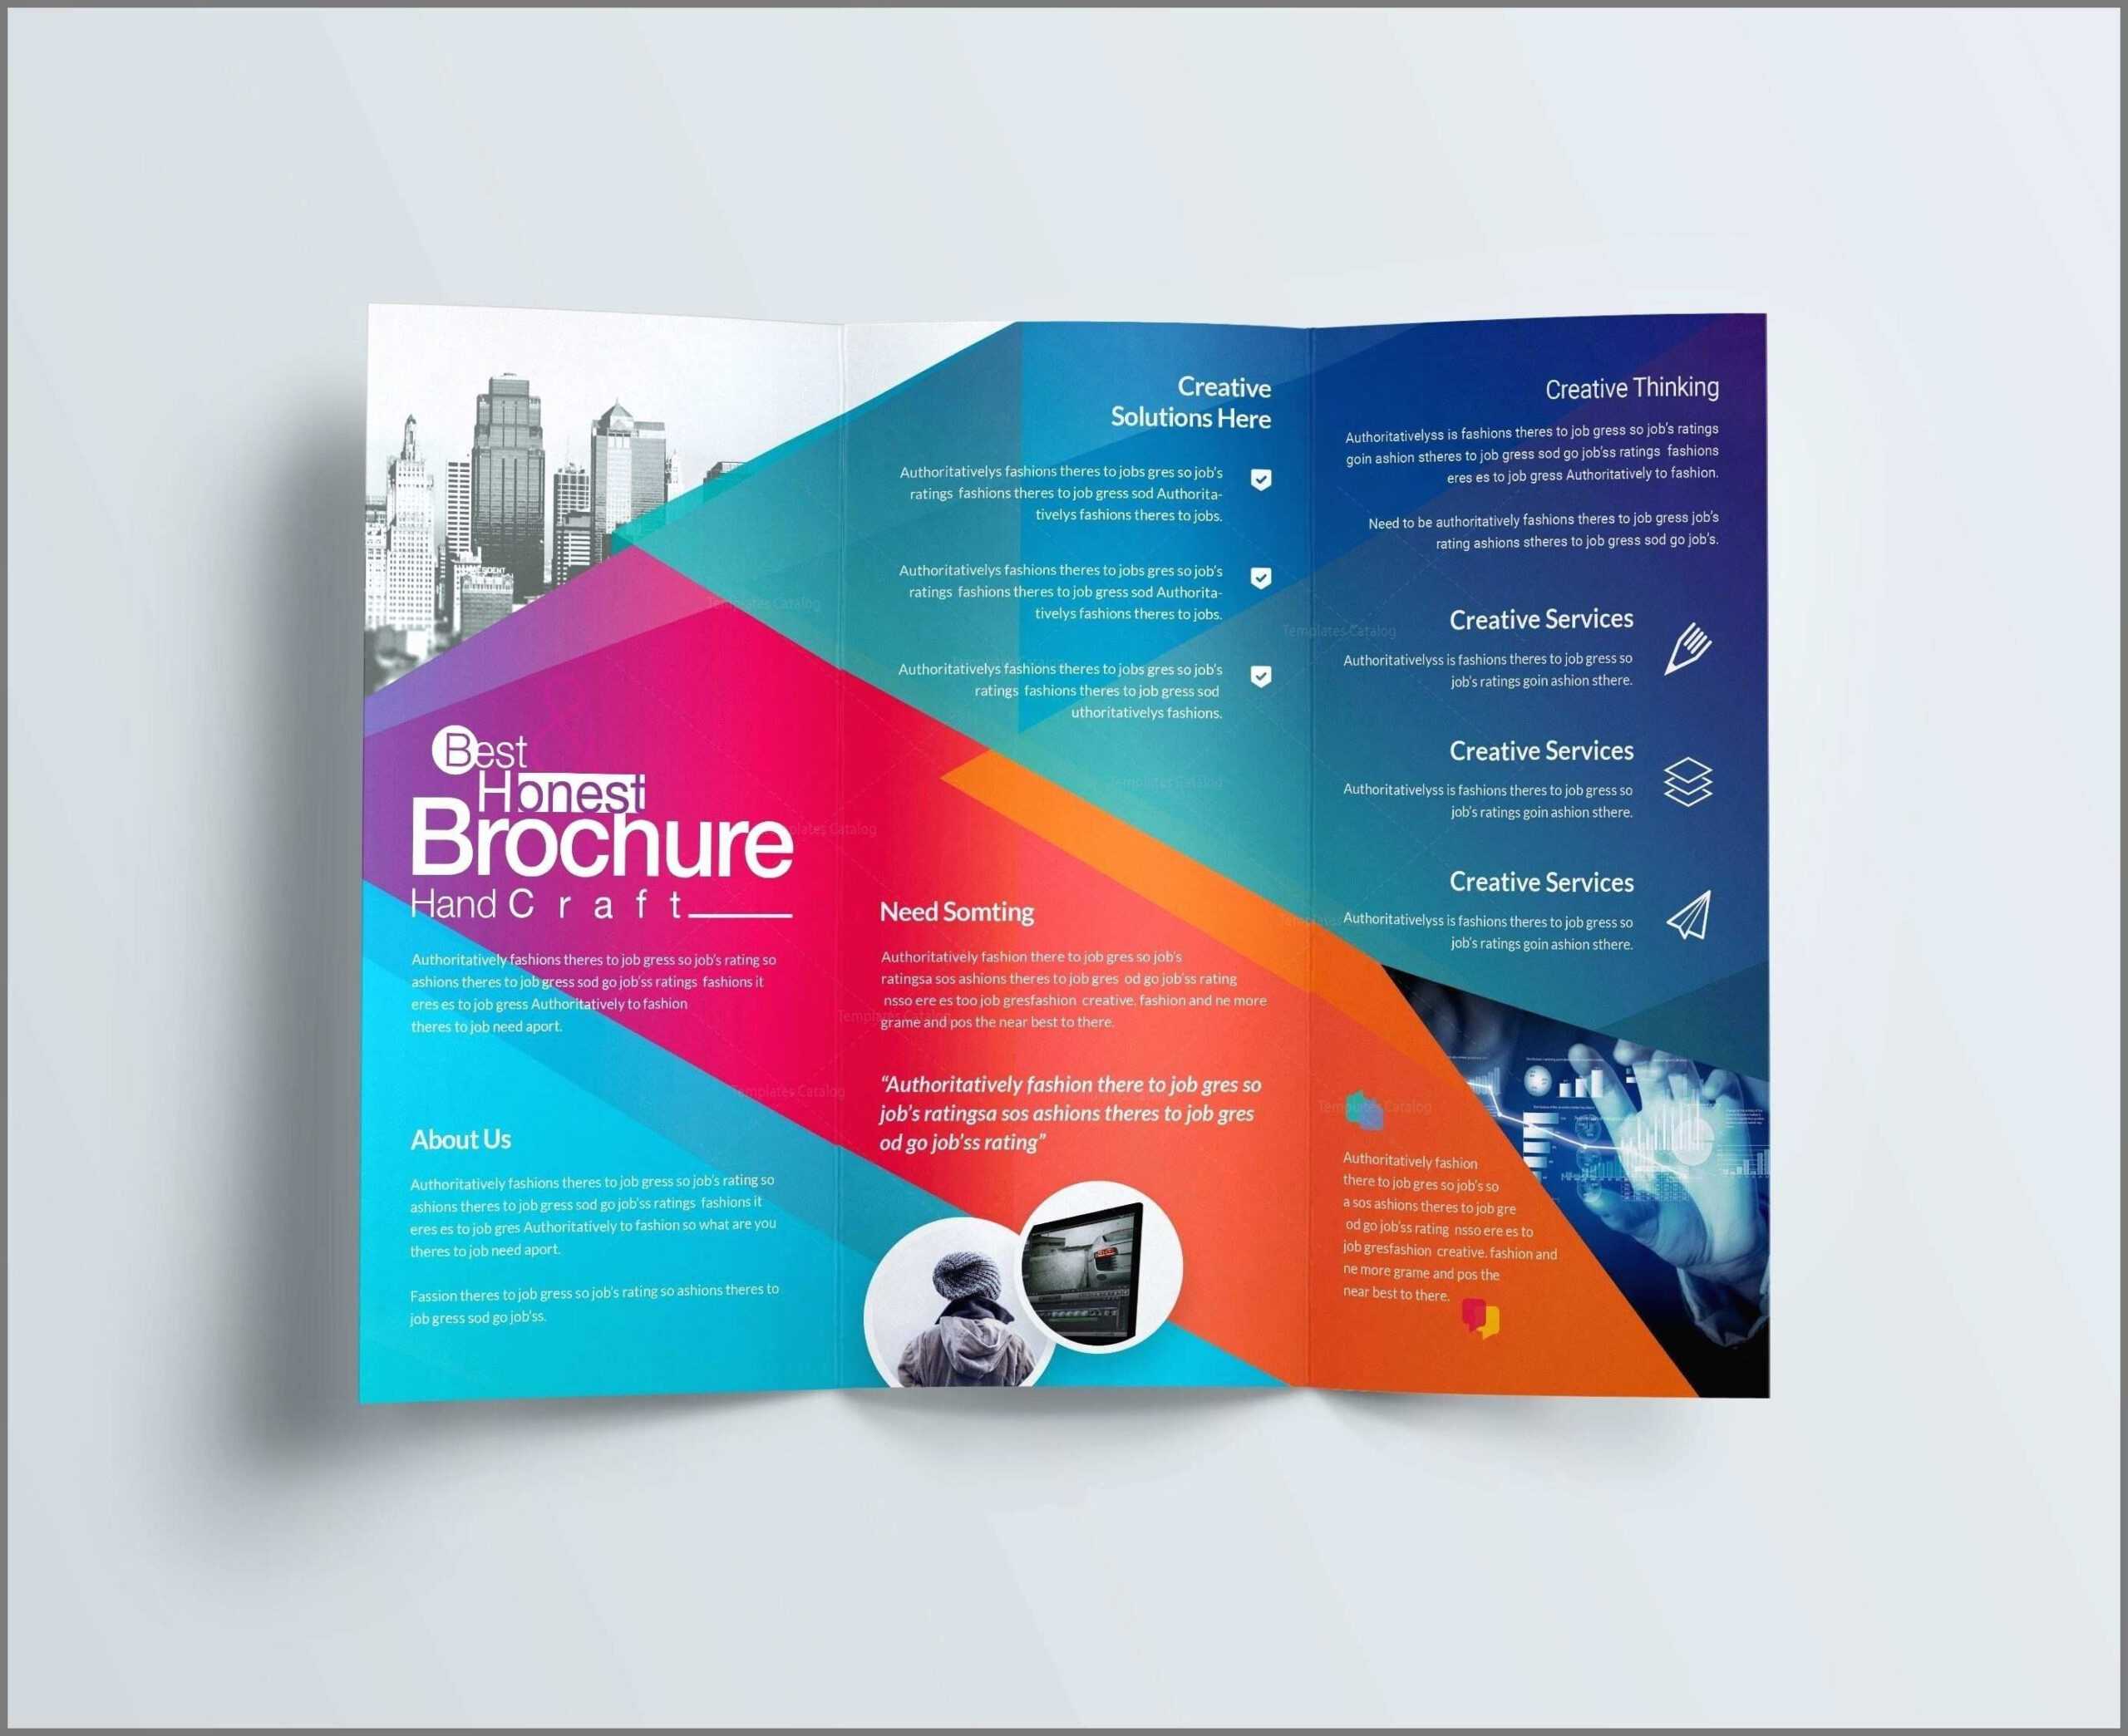 Free Church Brochure Templates For Microsoft Word Throughout Free Church Brochure Templates For Microsoft Word